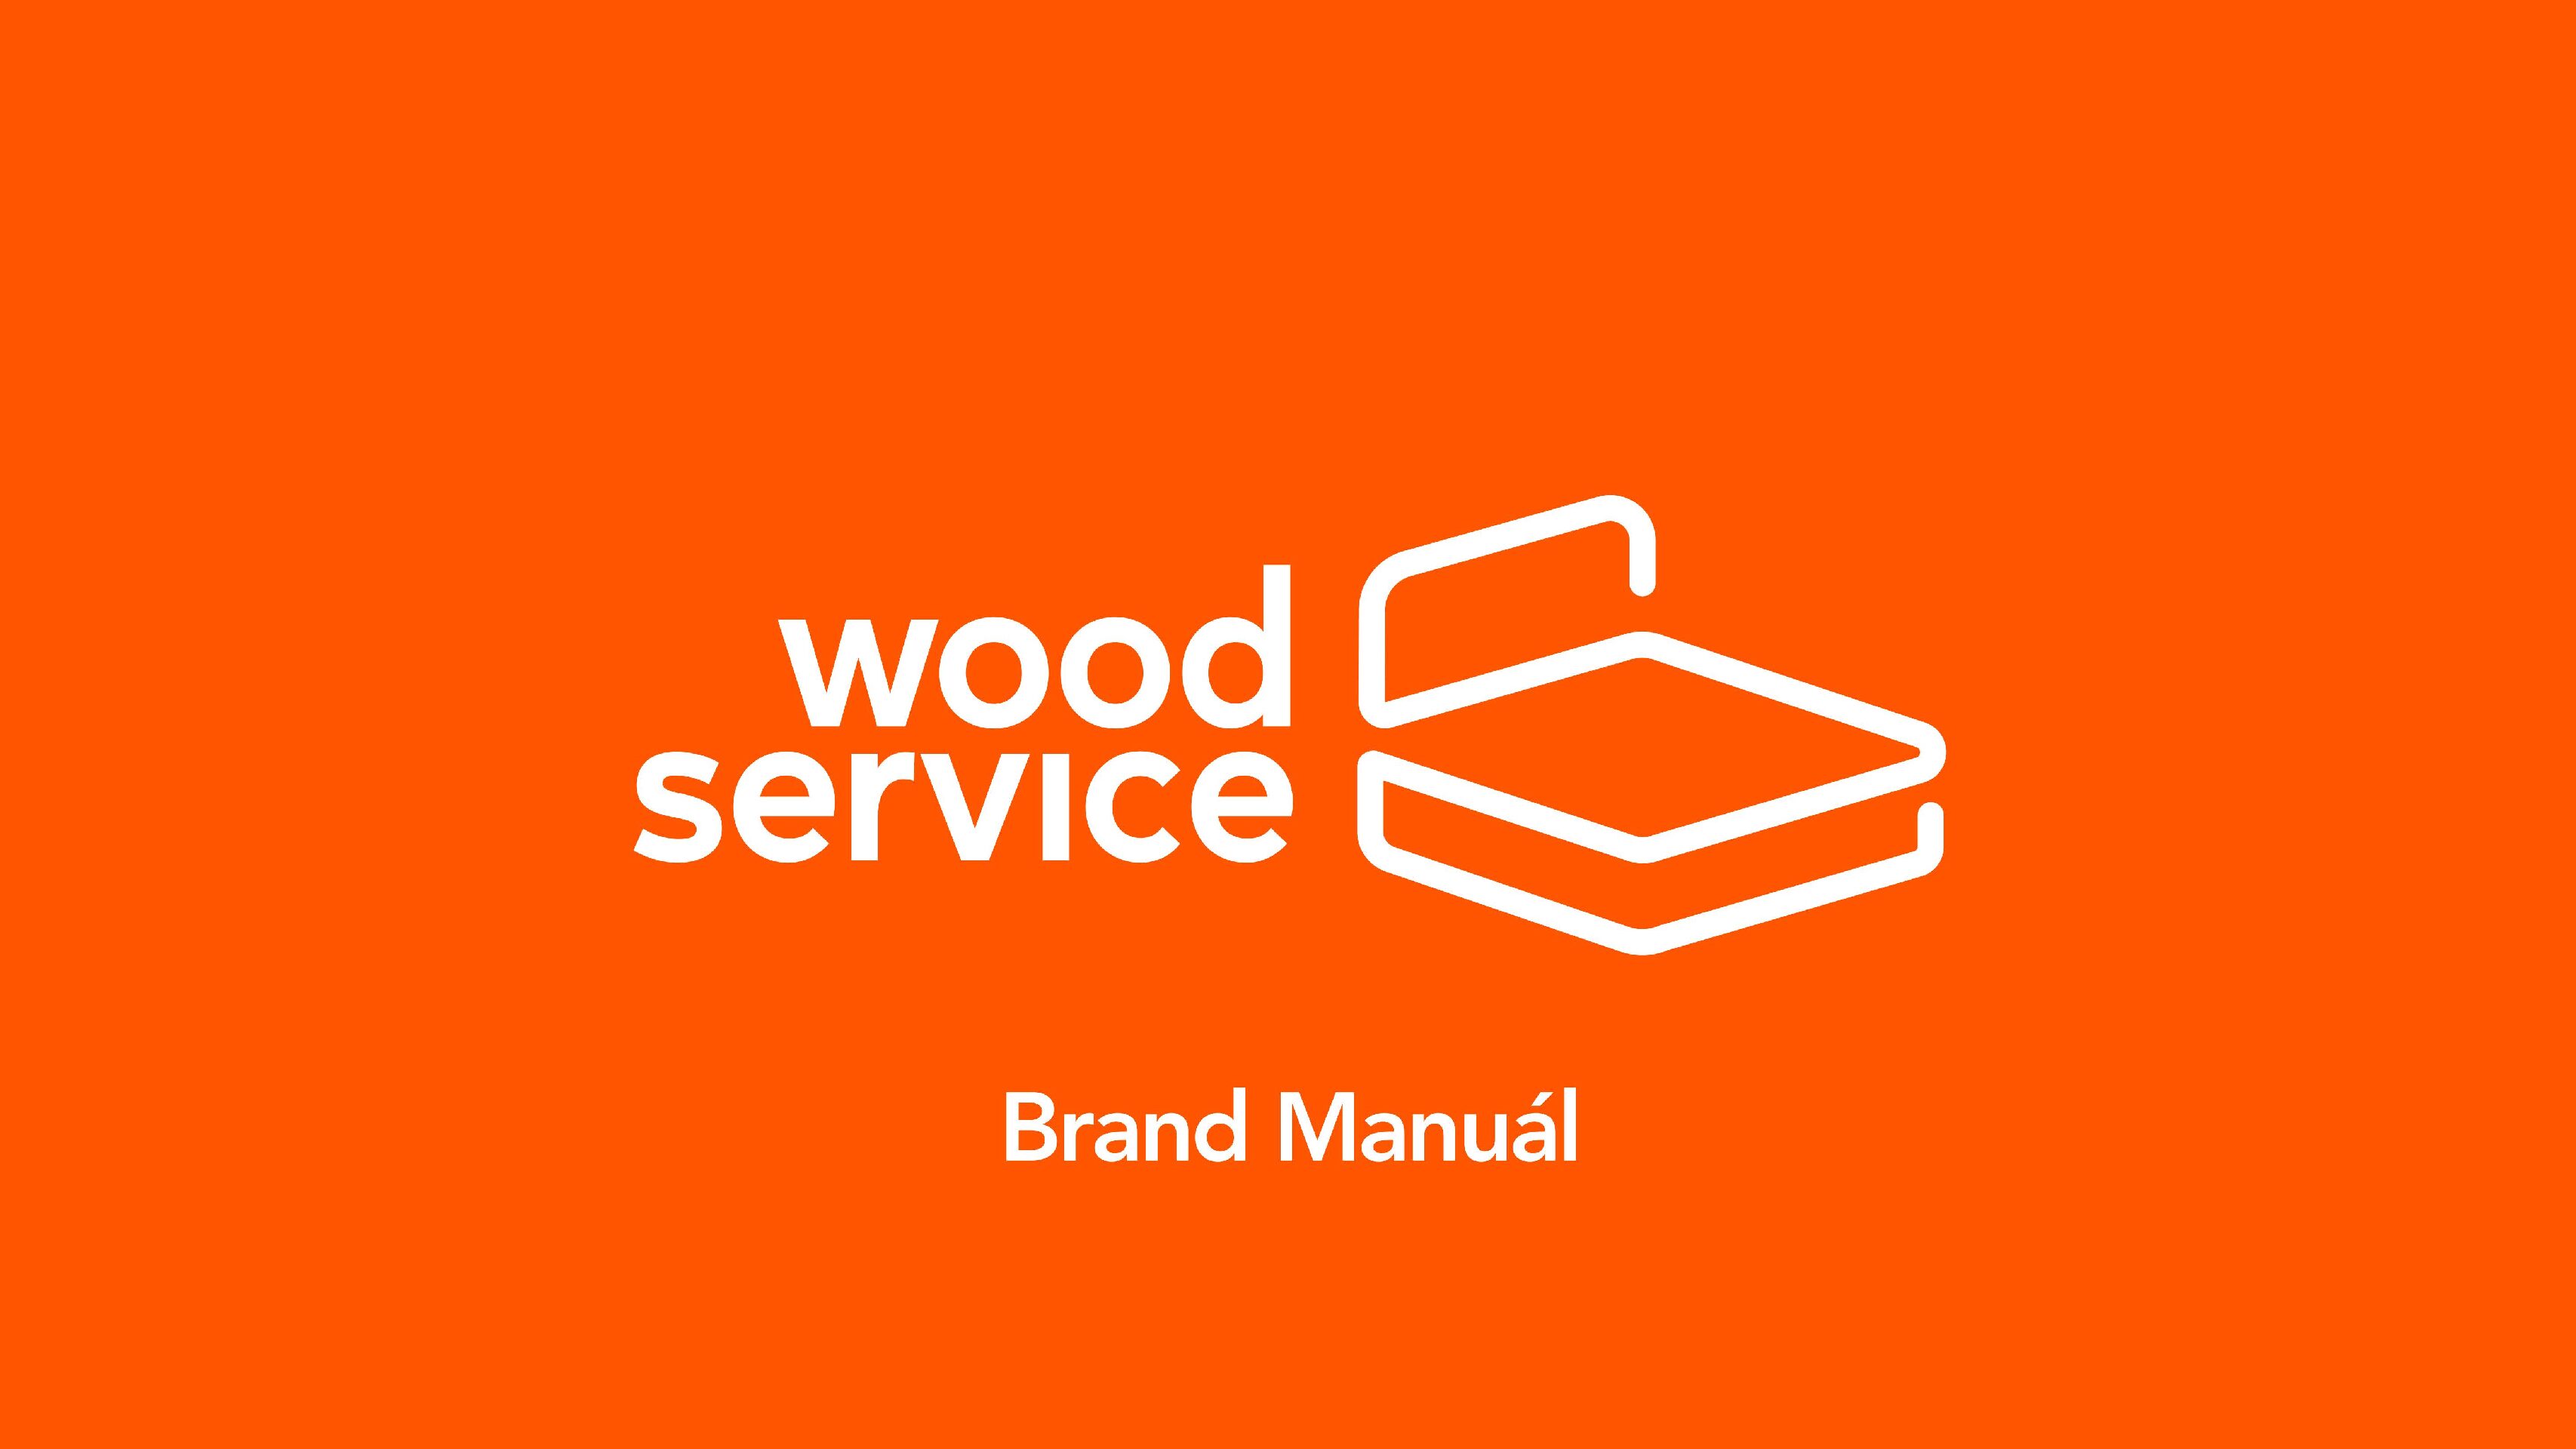 Wood service: Brand Identity